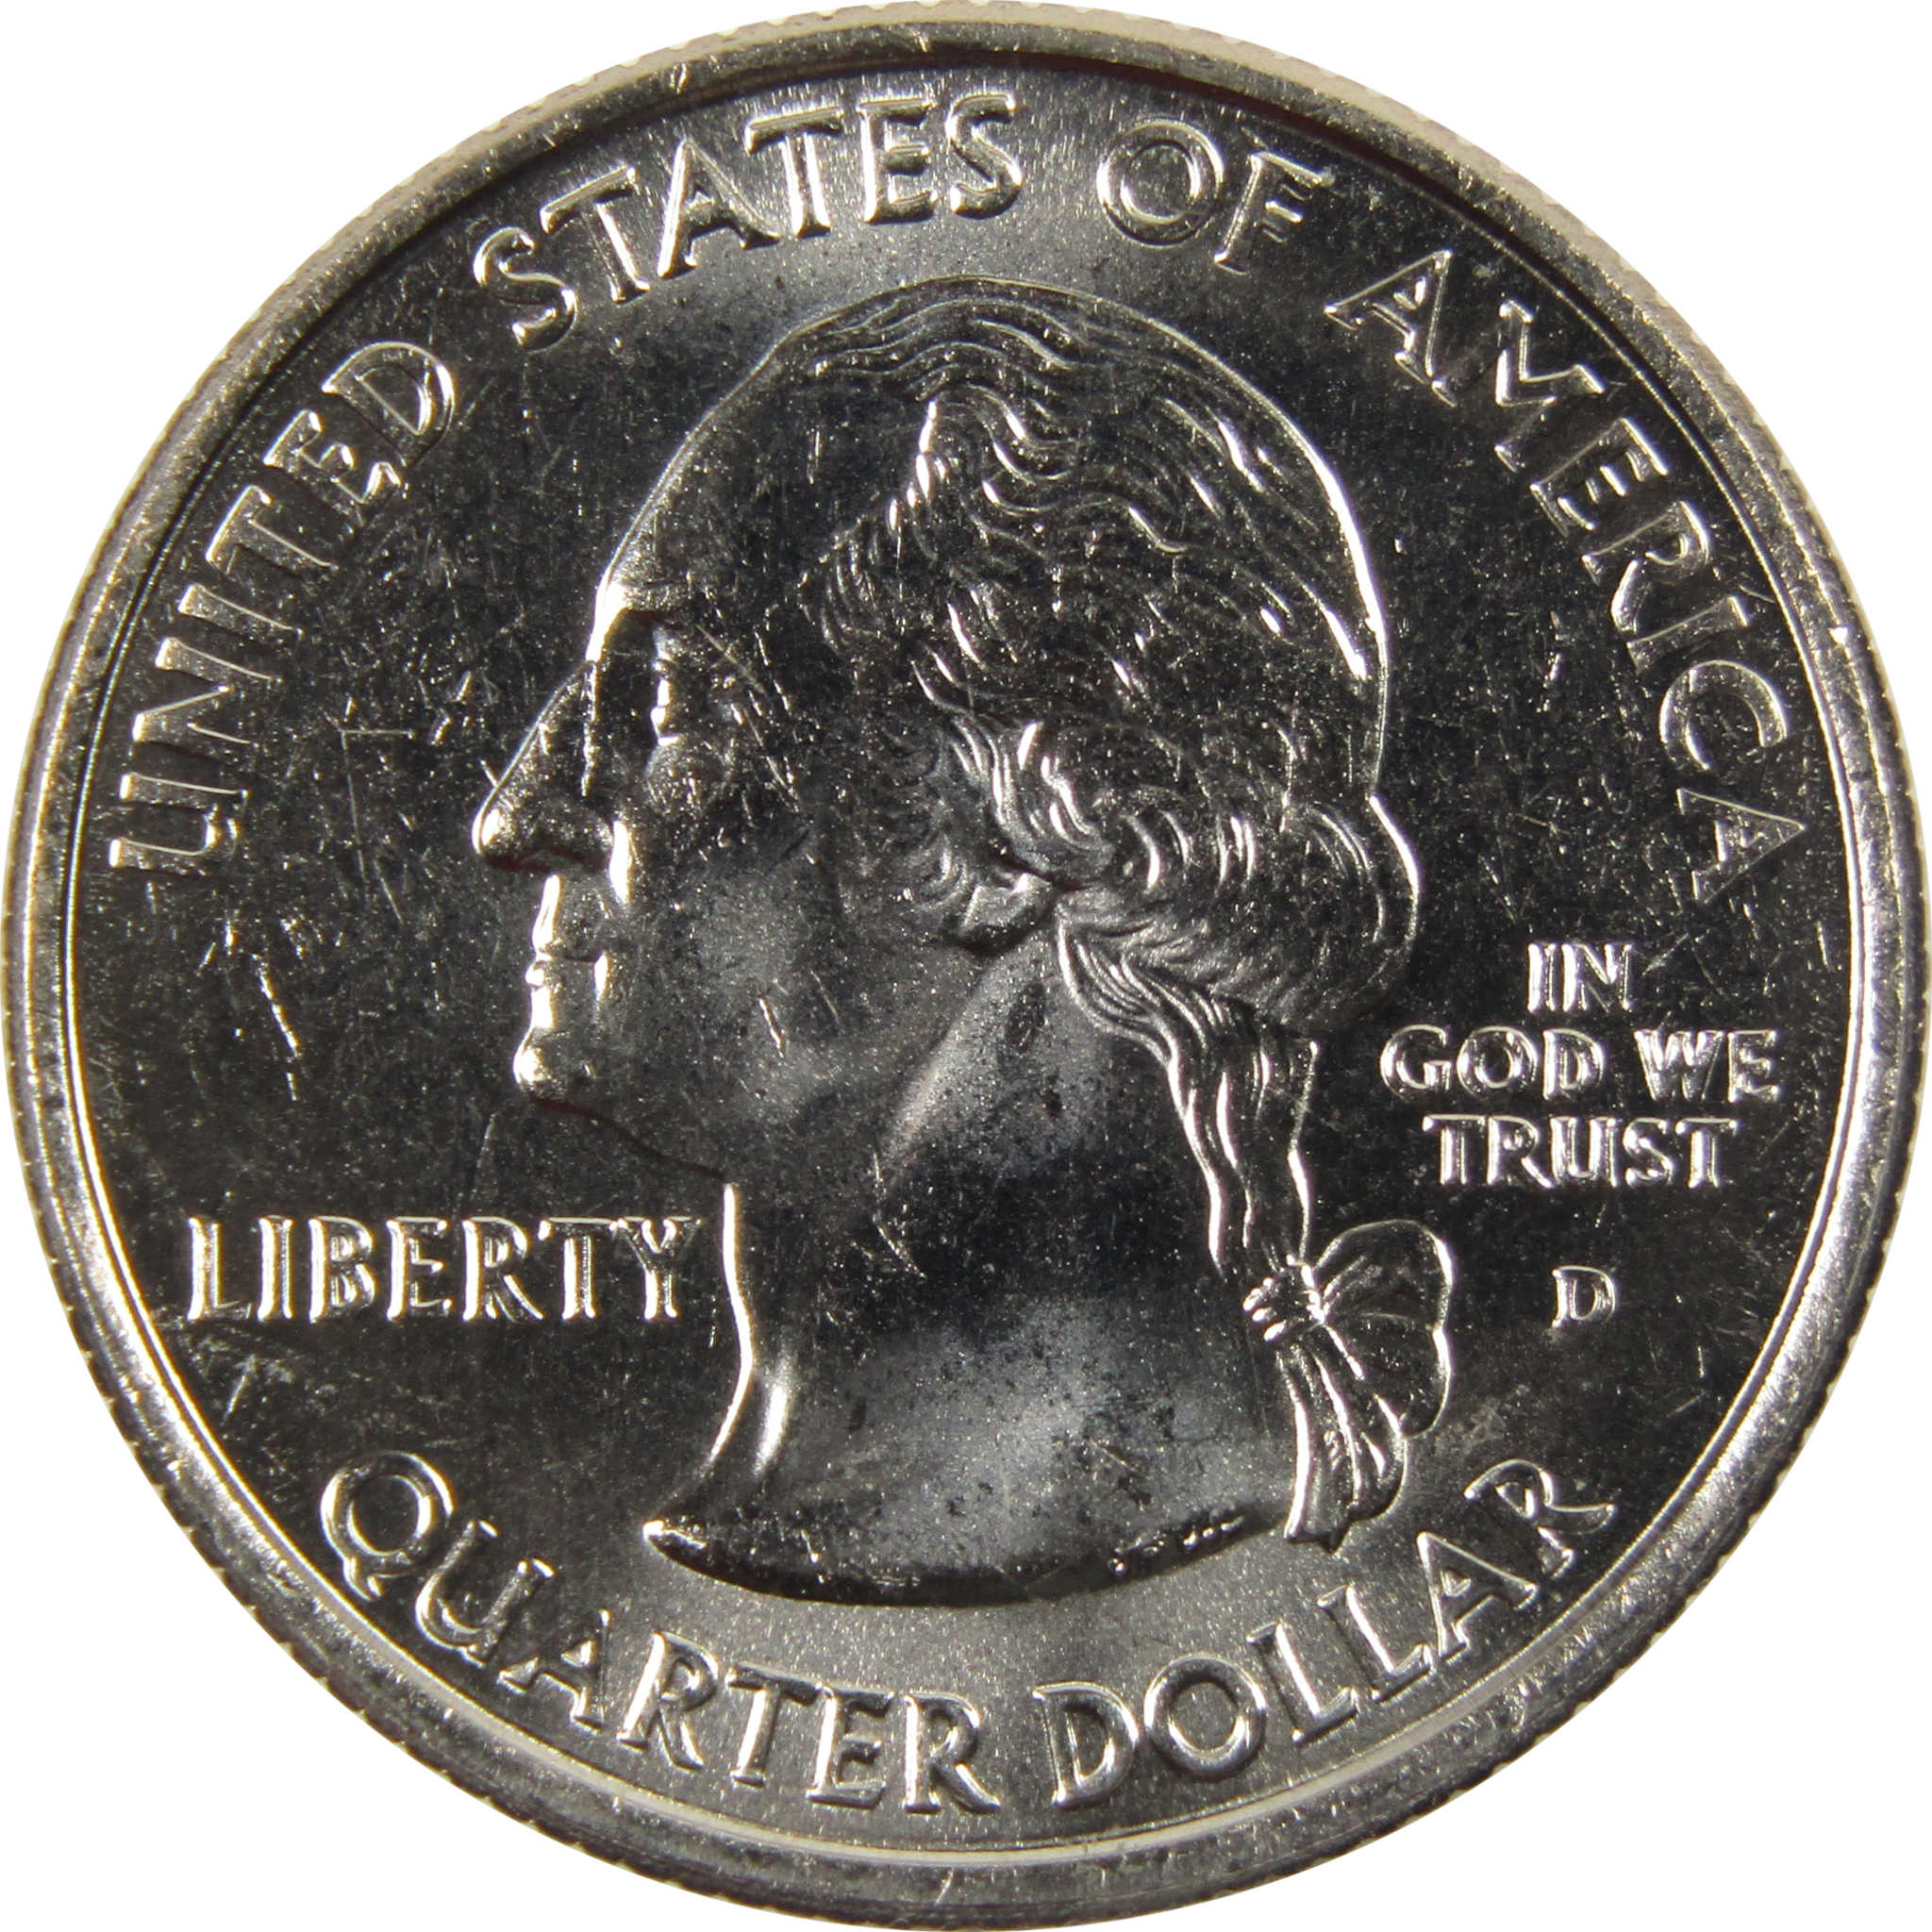 2007 D Utah State Quarter BU Uncirculated Clad 25c Coin